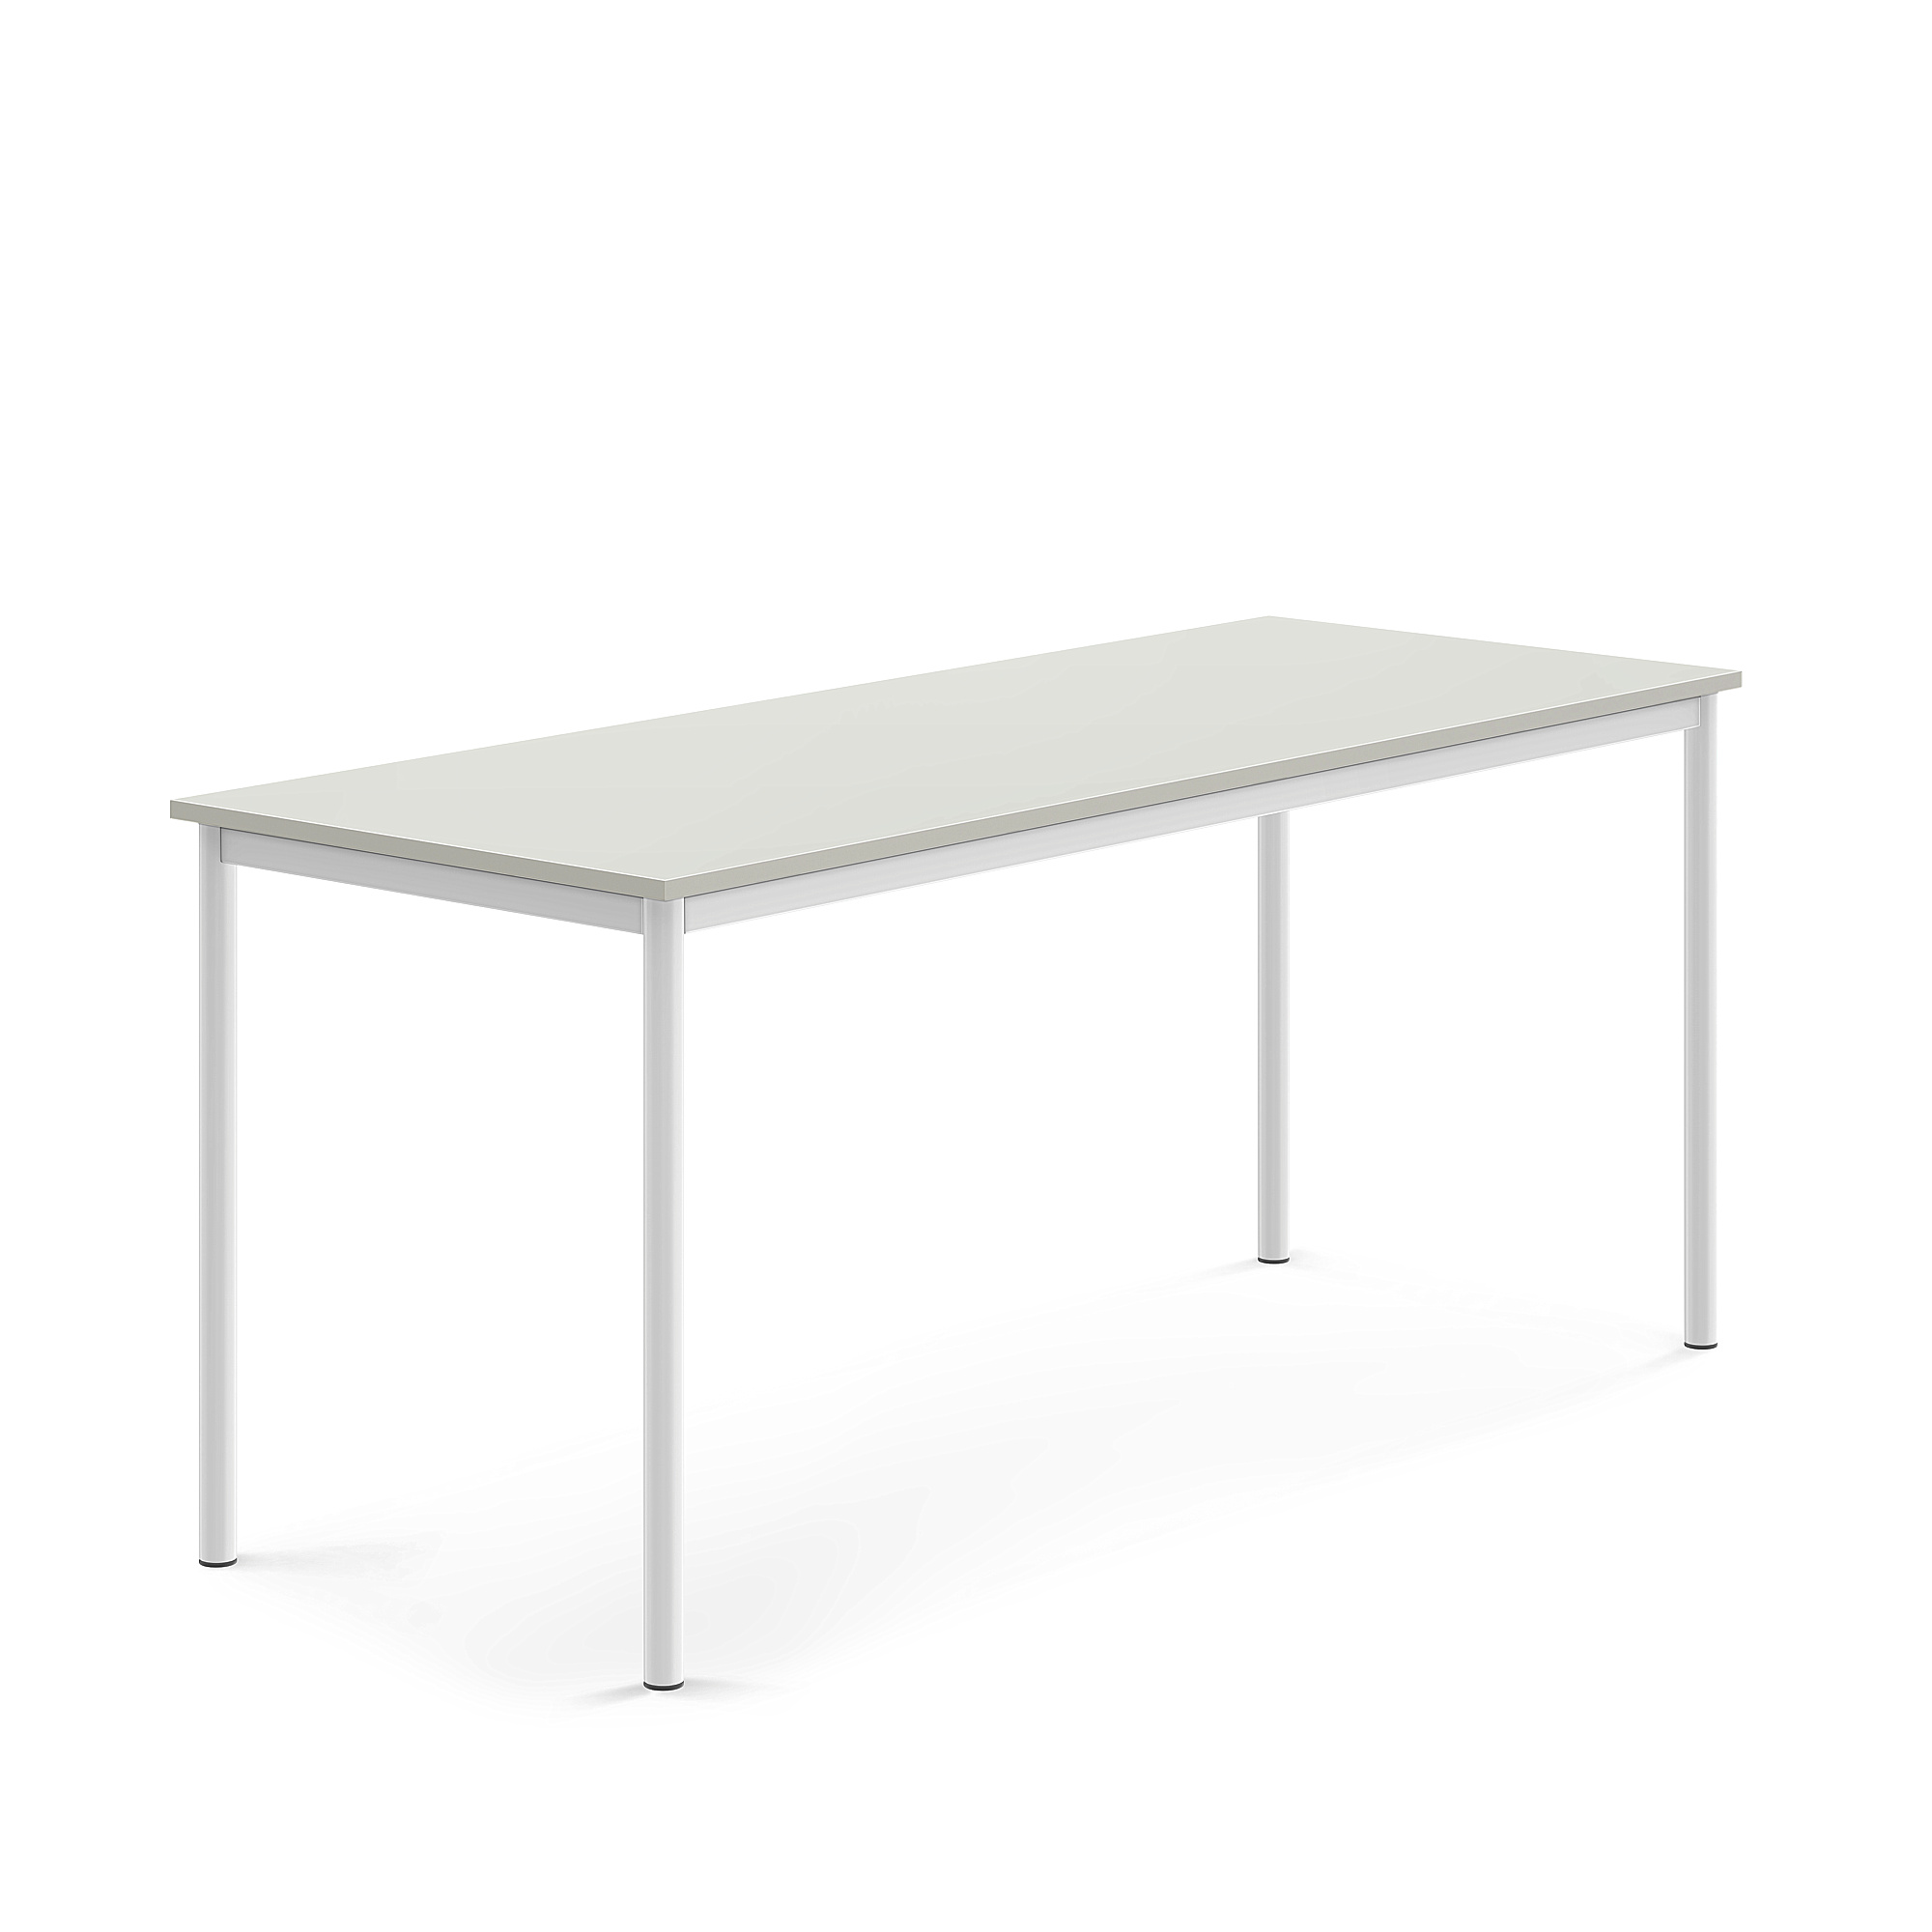 Stůl SONITUS, 1800x700x760 mm, bílé nohy, HPL deska tlumící hluk, šedá